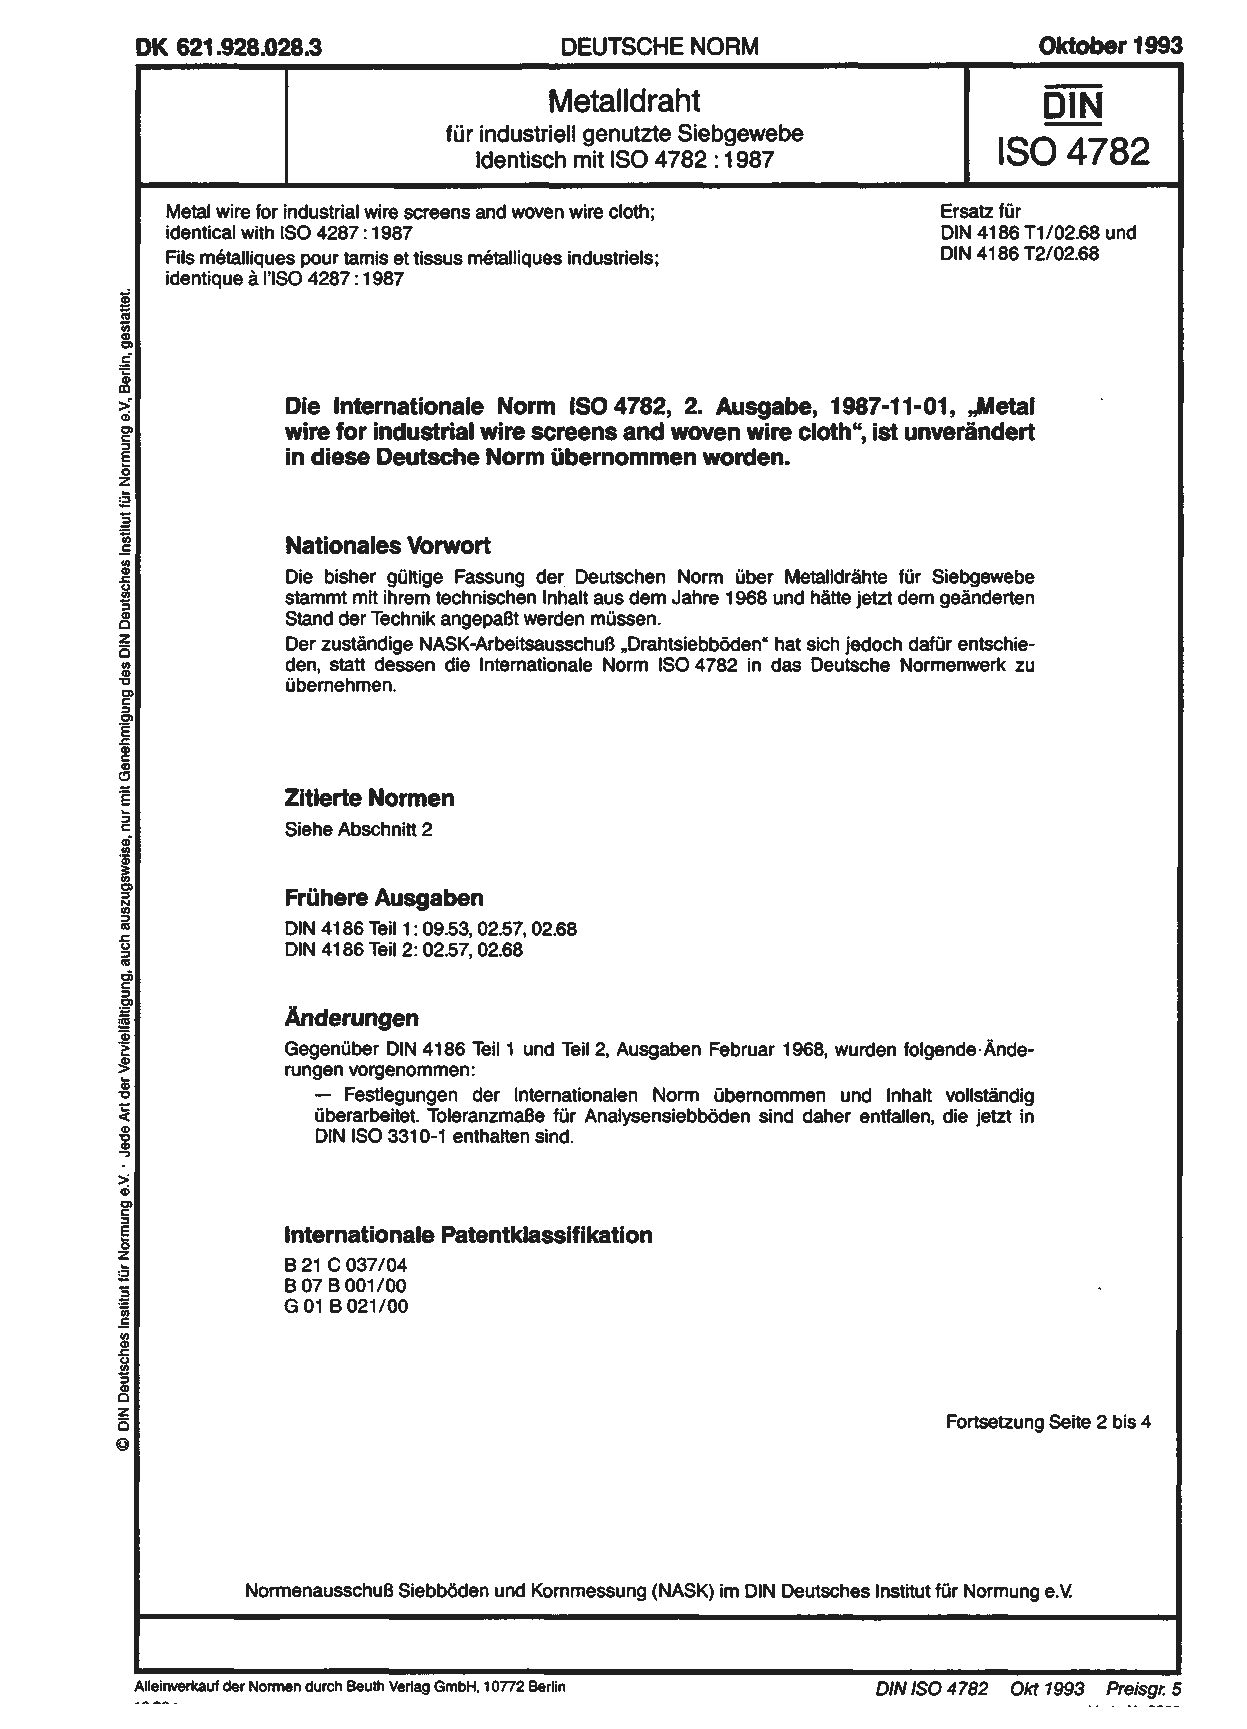 DIN ISO 4782:1993